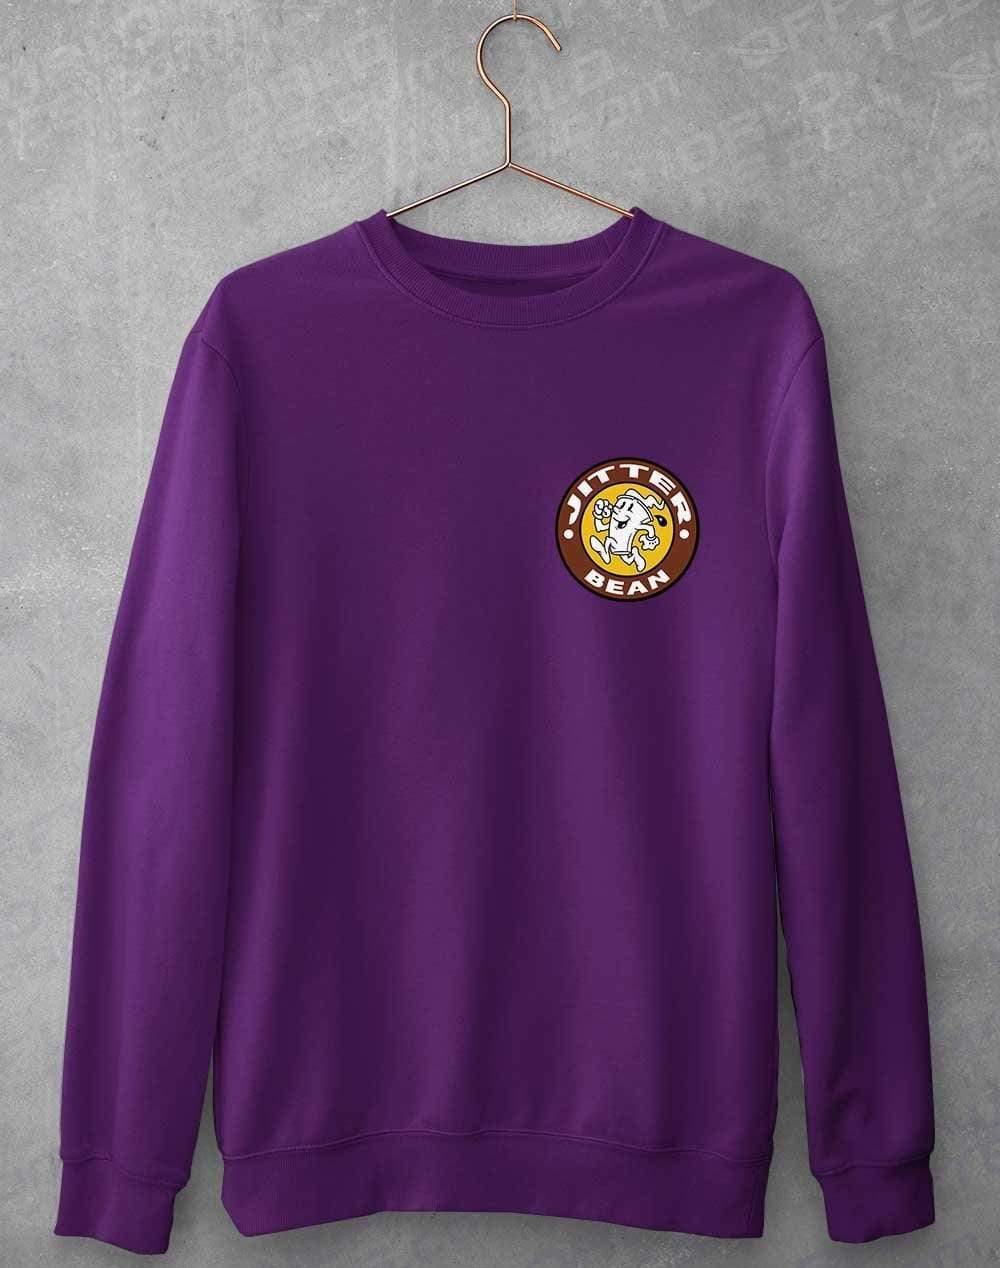 Jitter Bean Pocket Print Sweatshirt XS / Purple  - Off World Tees